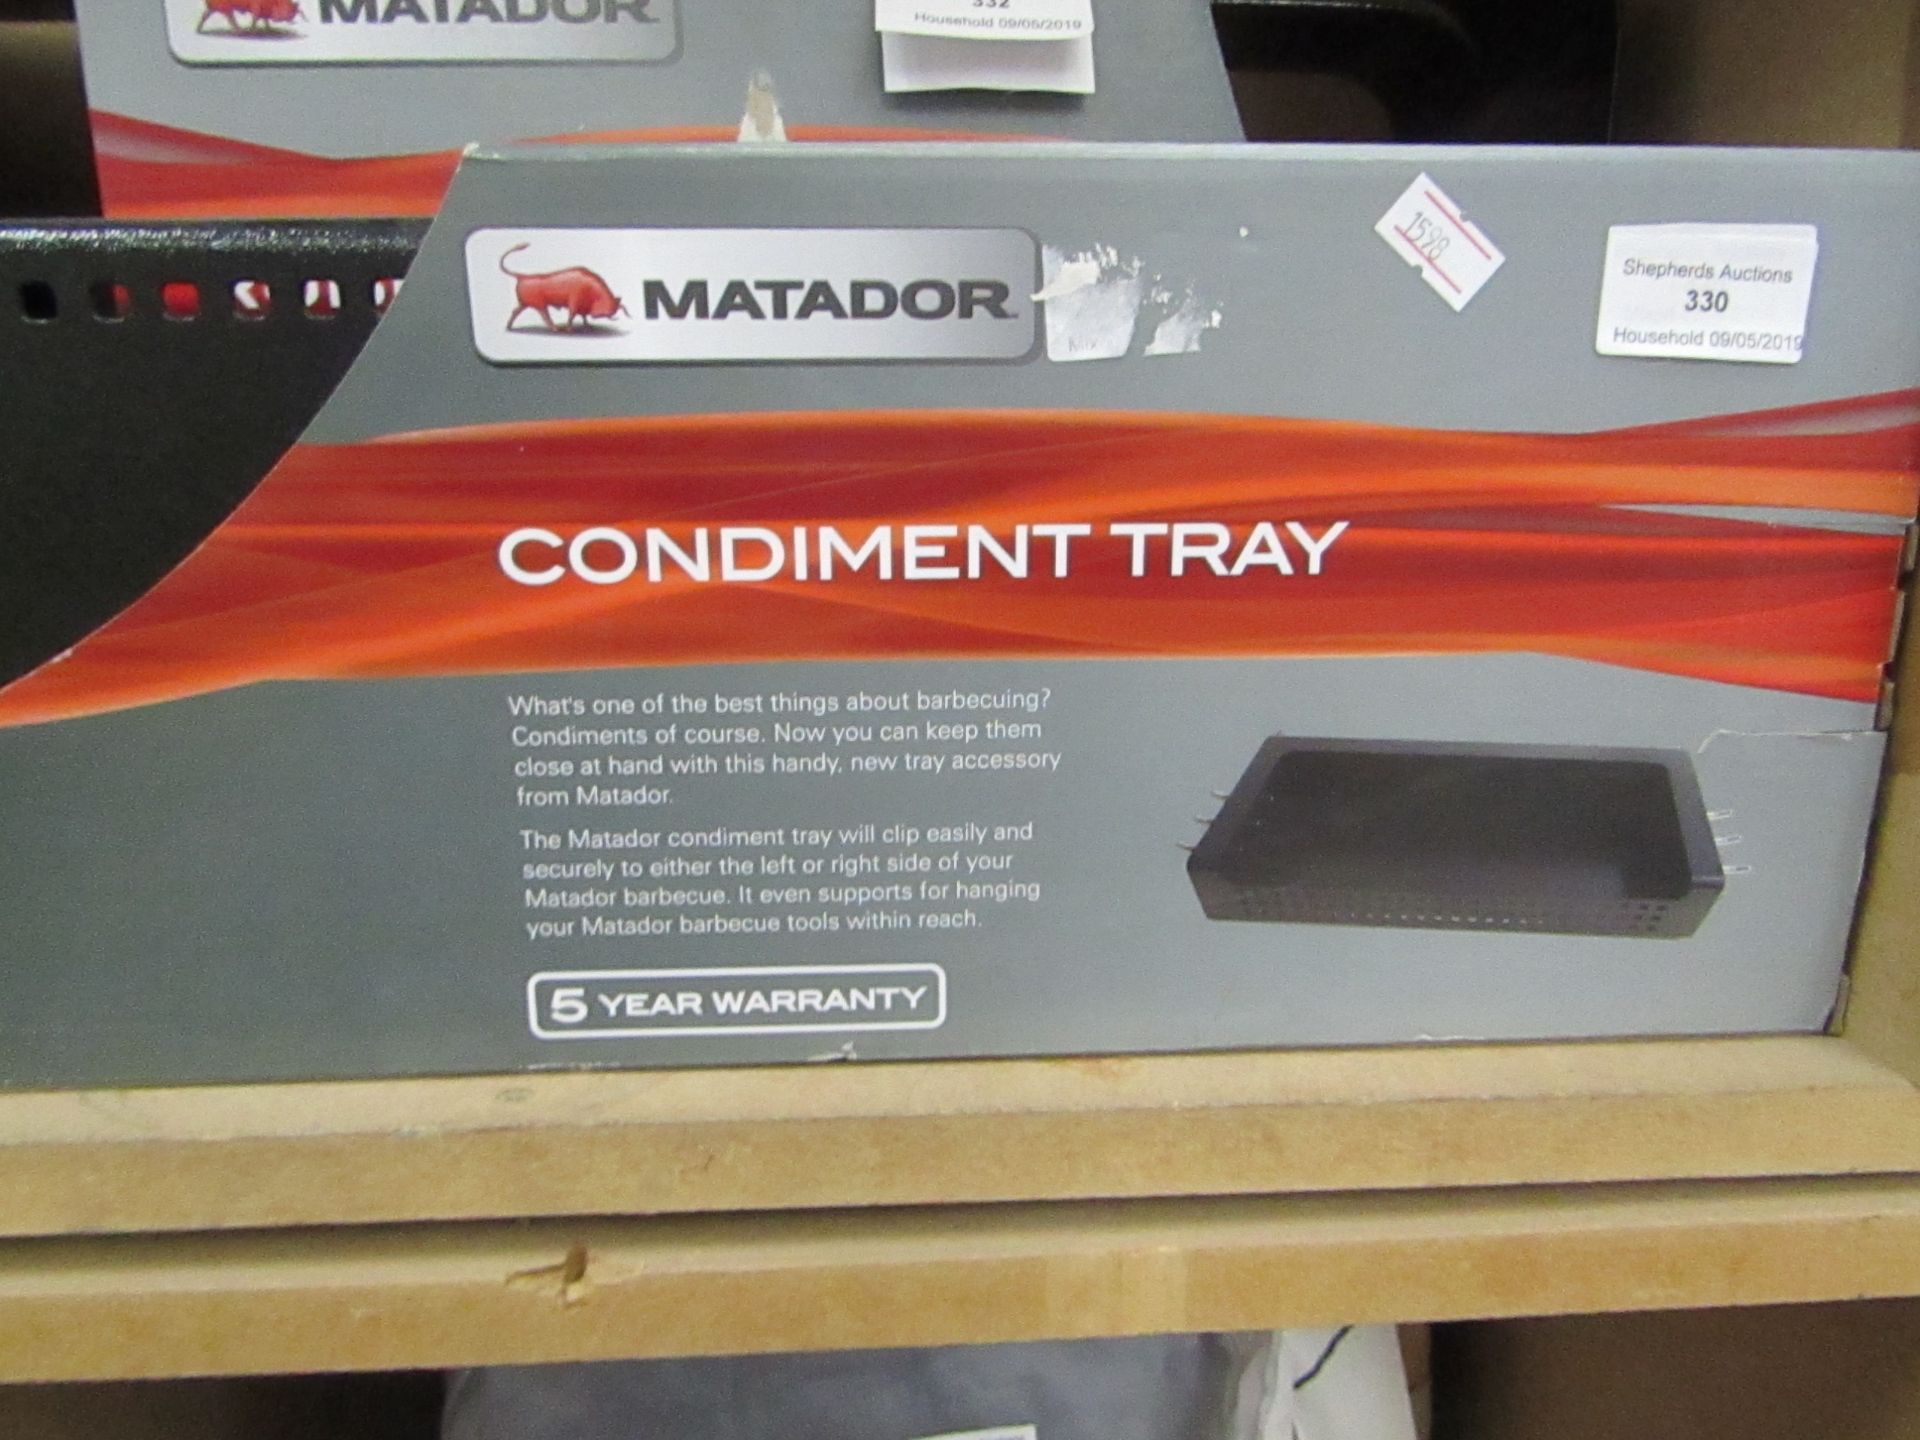 Matador condiment tray, new and boxed.